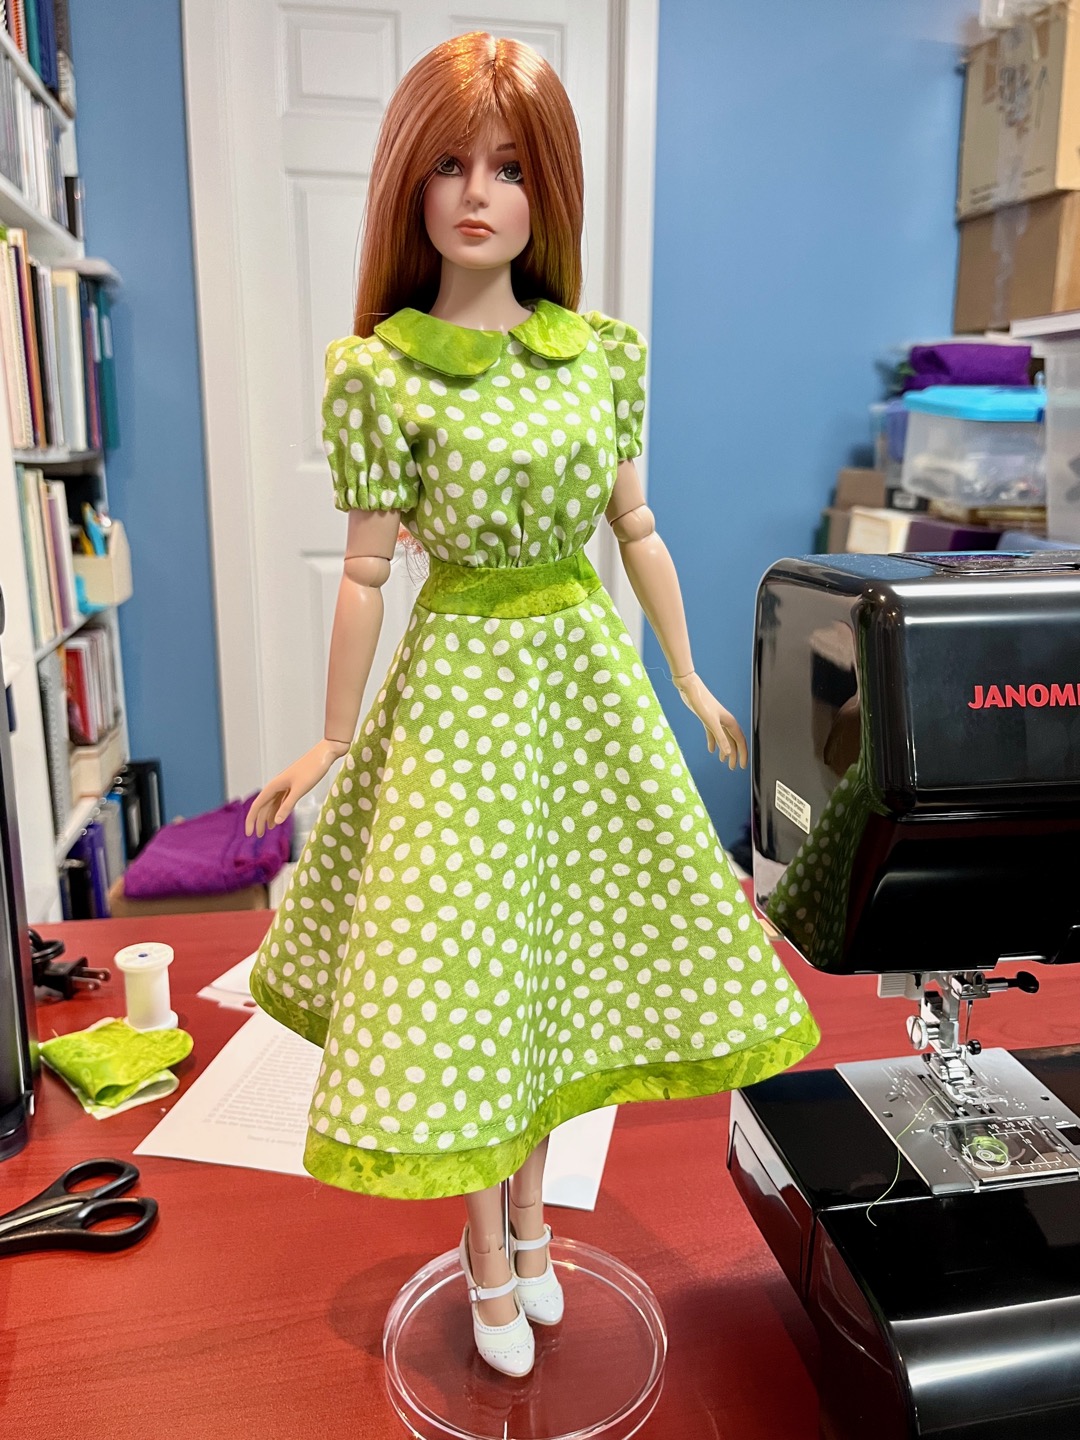 Rowan in her new apple-green dress for spring